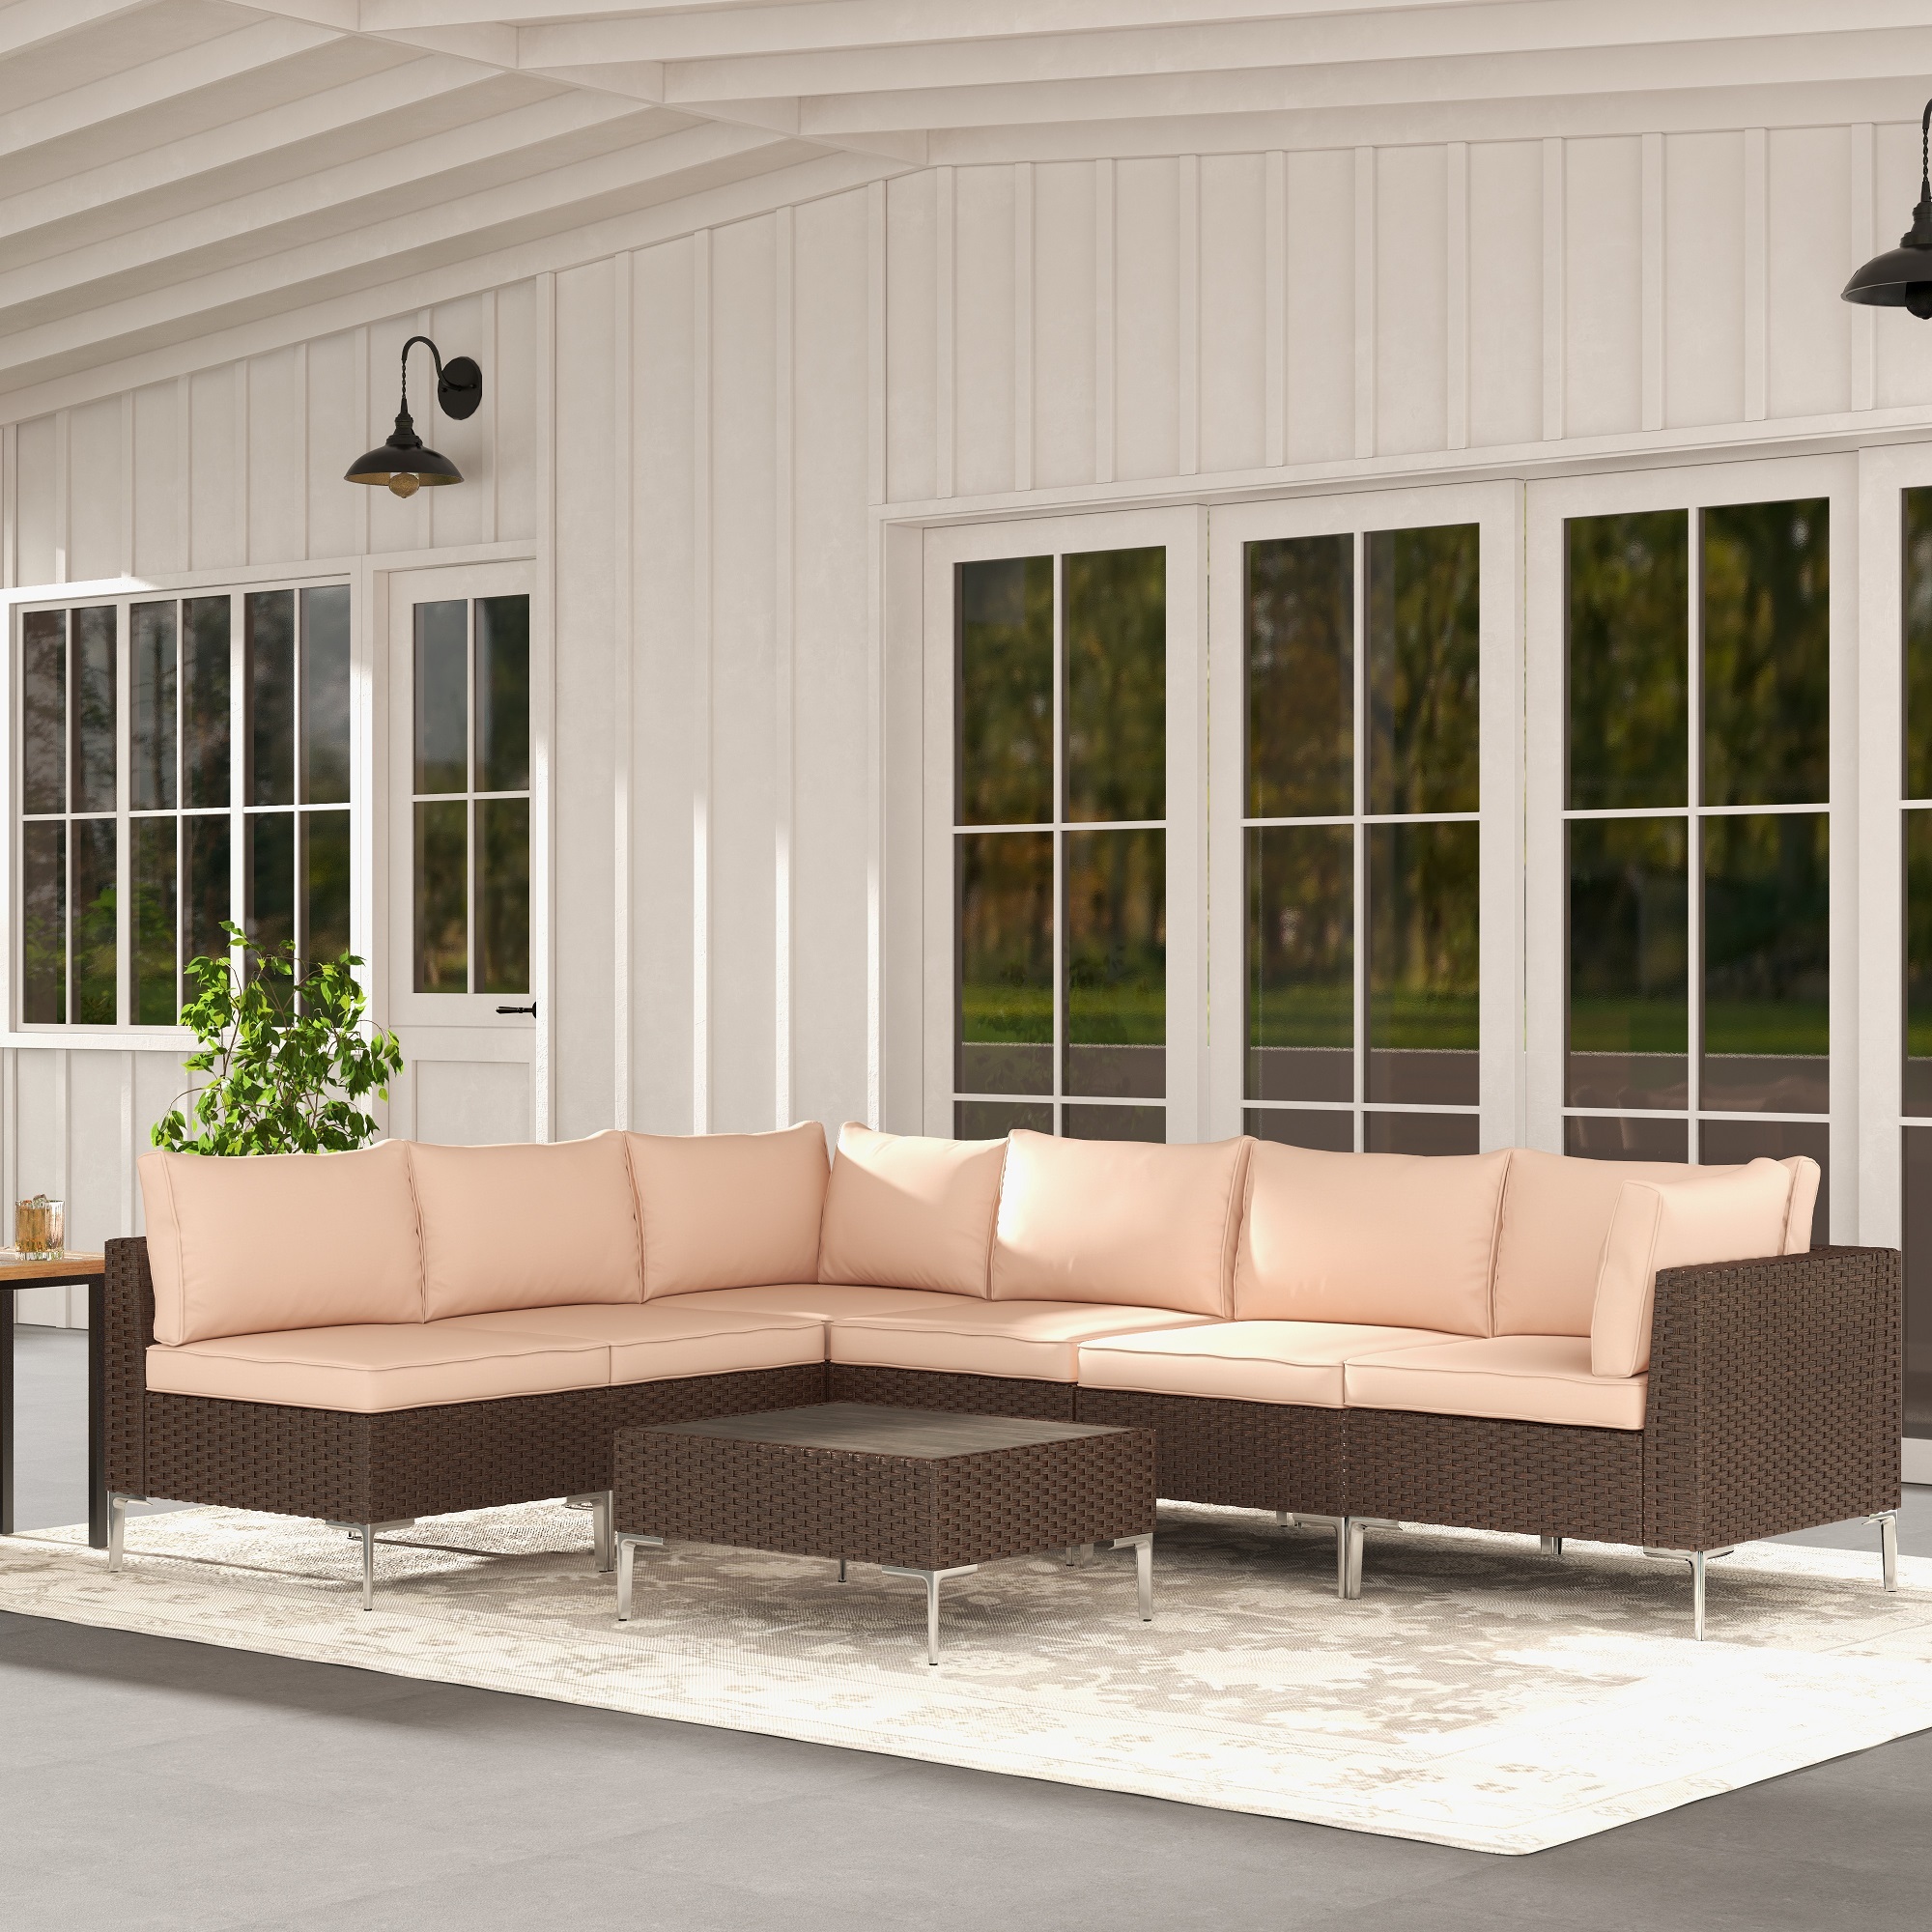 HOMREST 7 Piece Outdoor Patio Furniture Sets, Wicker Rattan Patio Conversation Sets, Steel Frame, Khaki - image 4 of 8